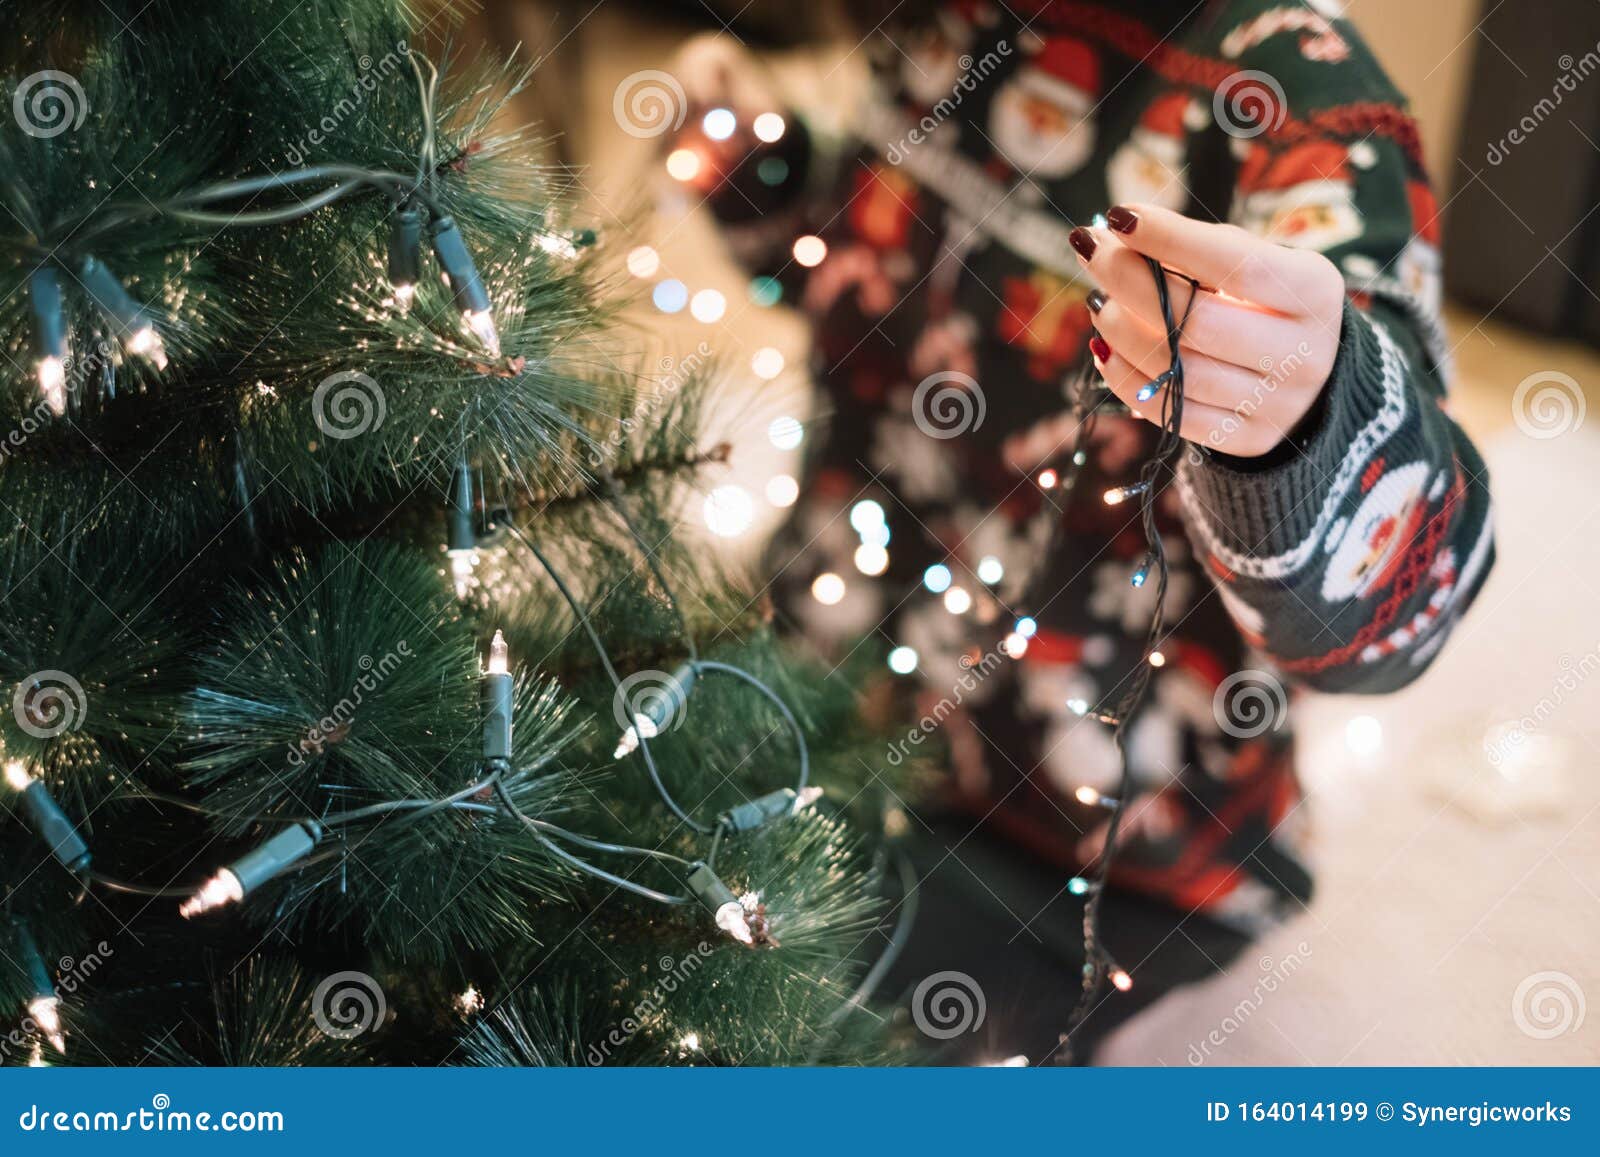 girls hand putting christmas lights to tree